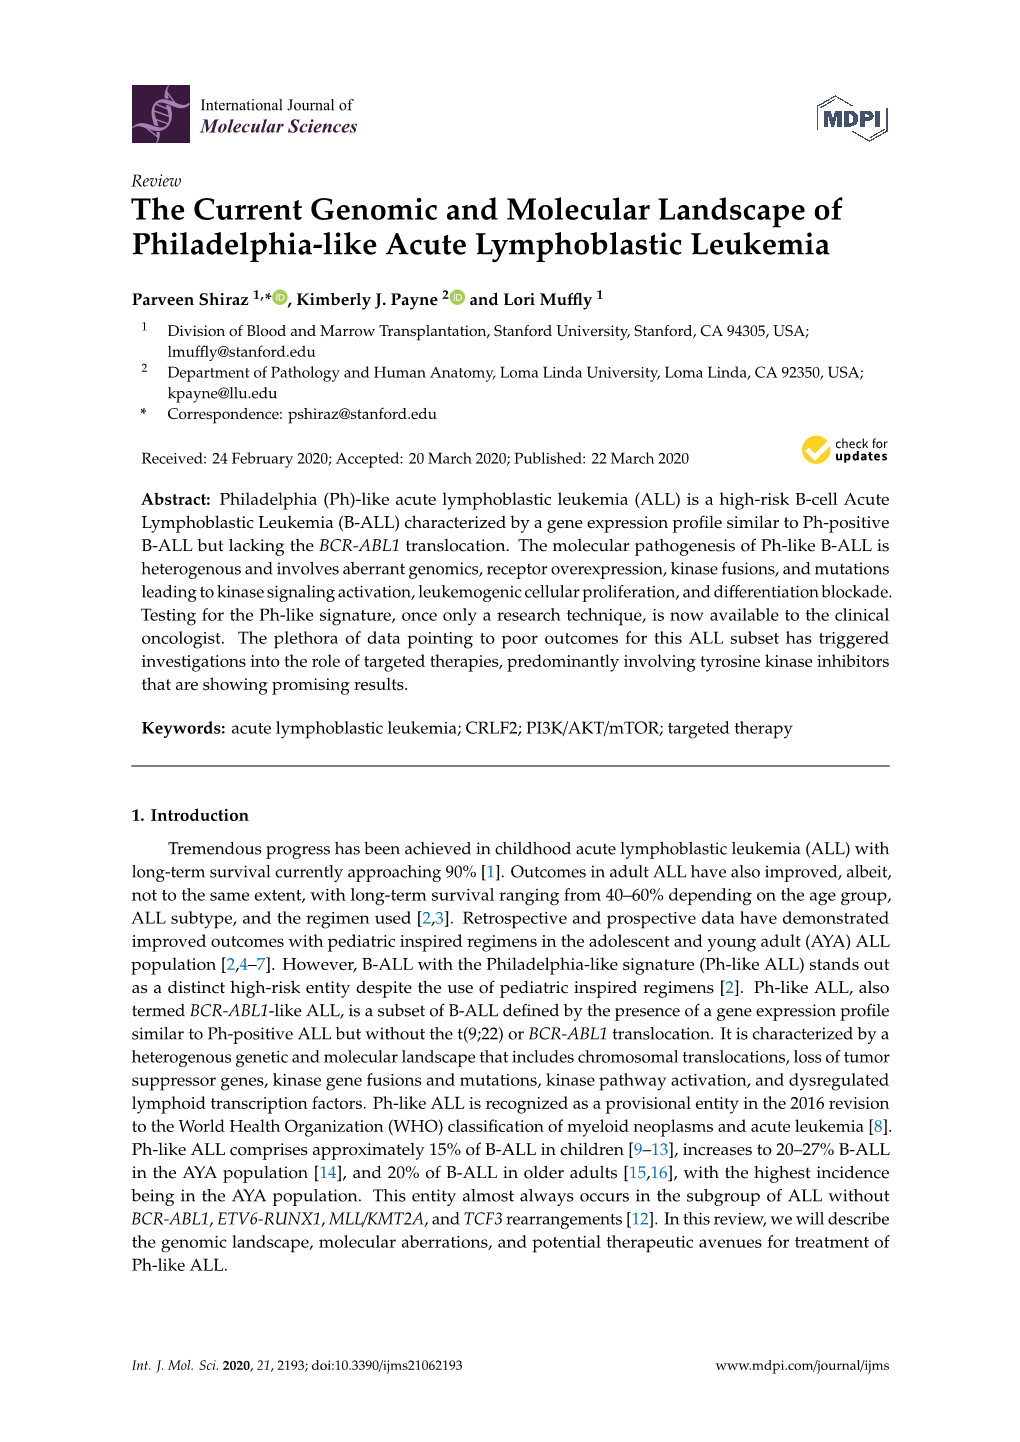 The Current Genomic and Molecular Landscape of Philadelphia-Like Acute Lymphoblastic Leukemia